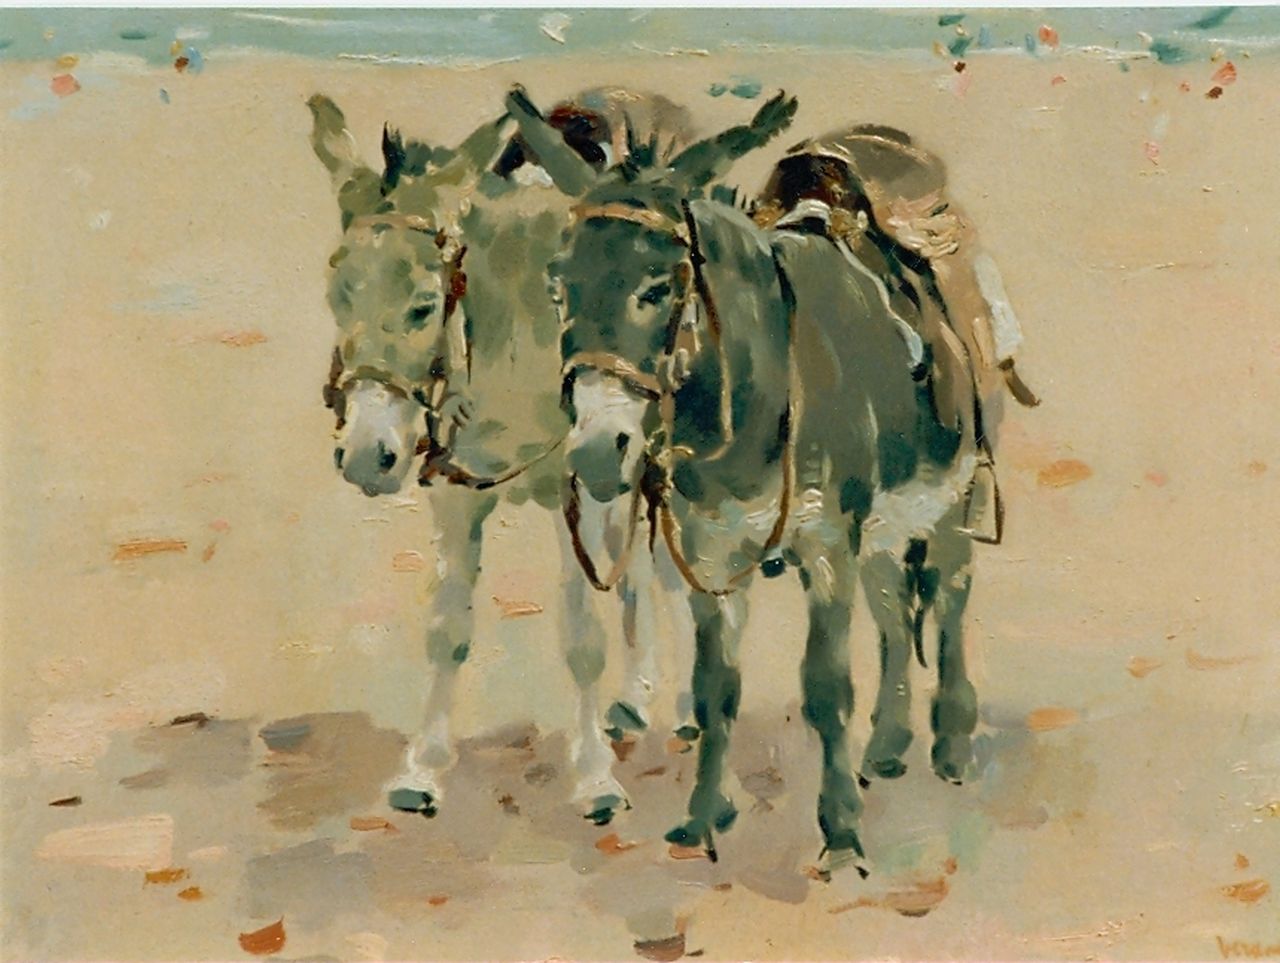 Verdonk F.W.  | Frederik Willem 'Frits' Verdonk, Donkies on the beach, oil on panel 34.2 x 47.3 cm, signed l.r.